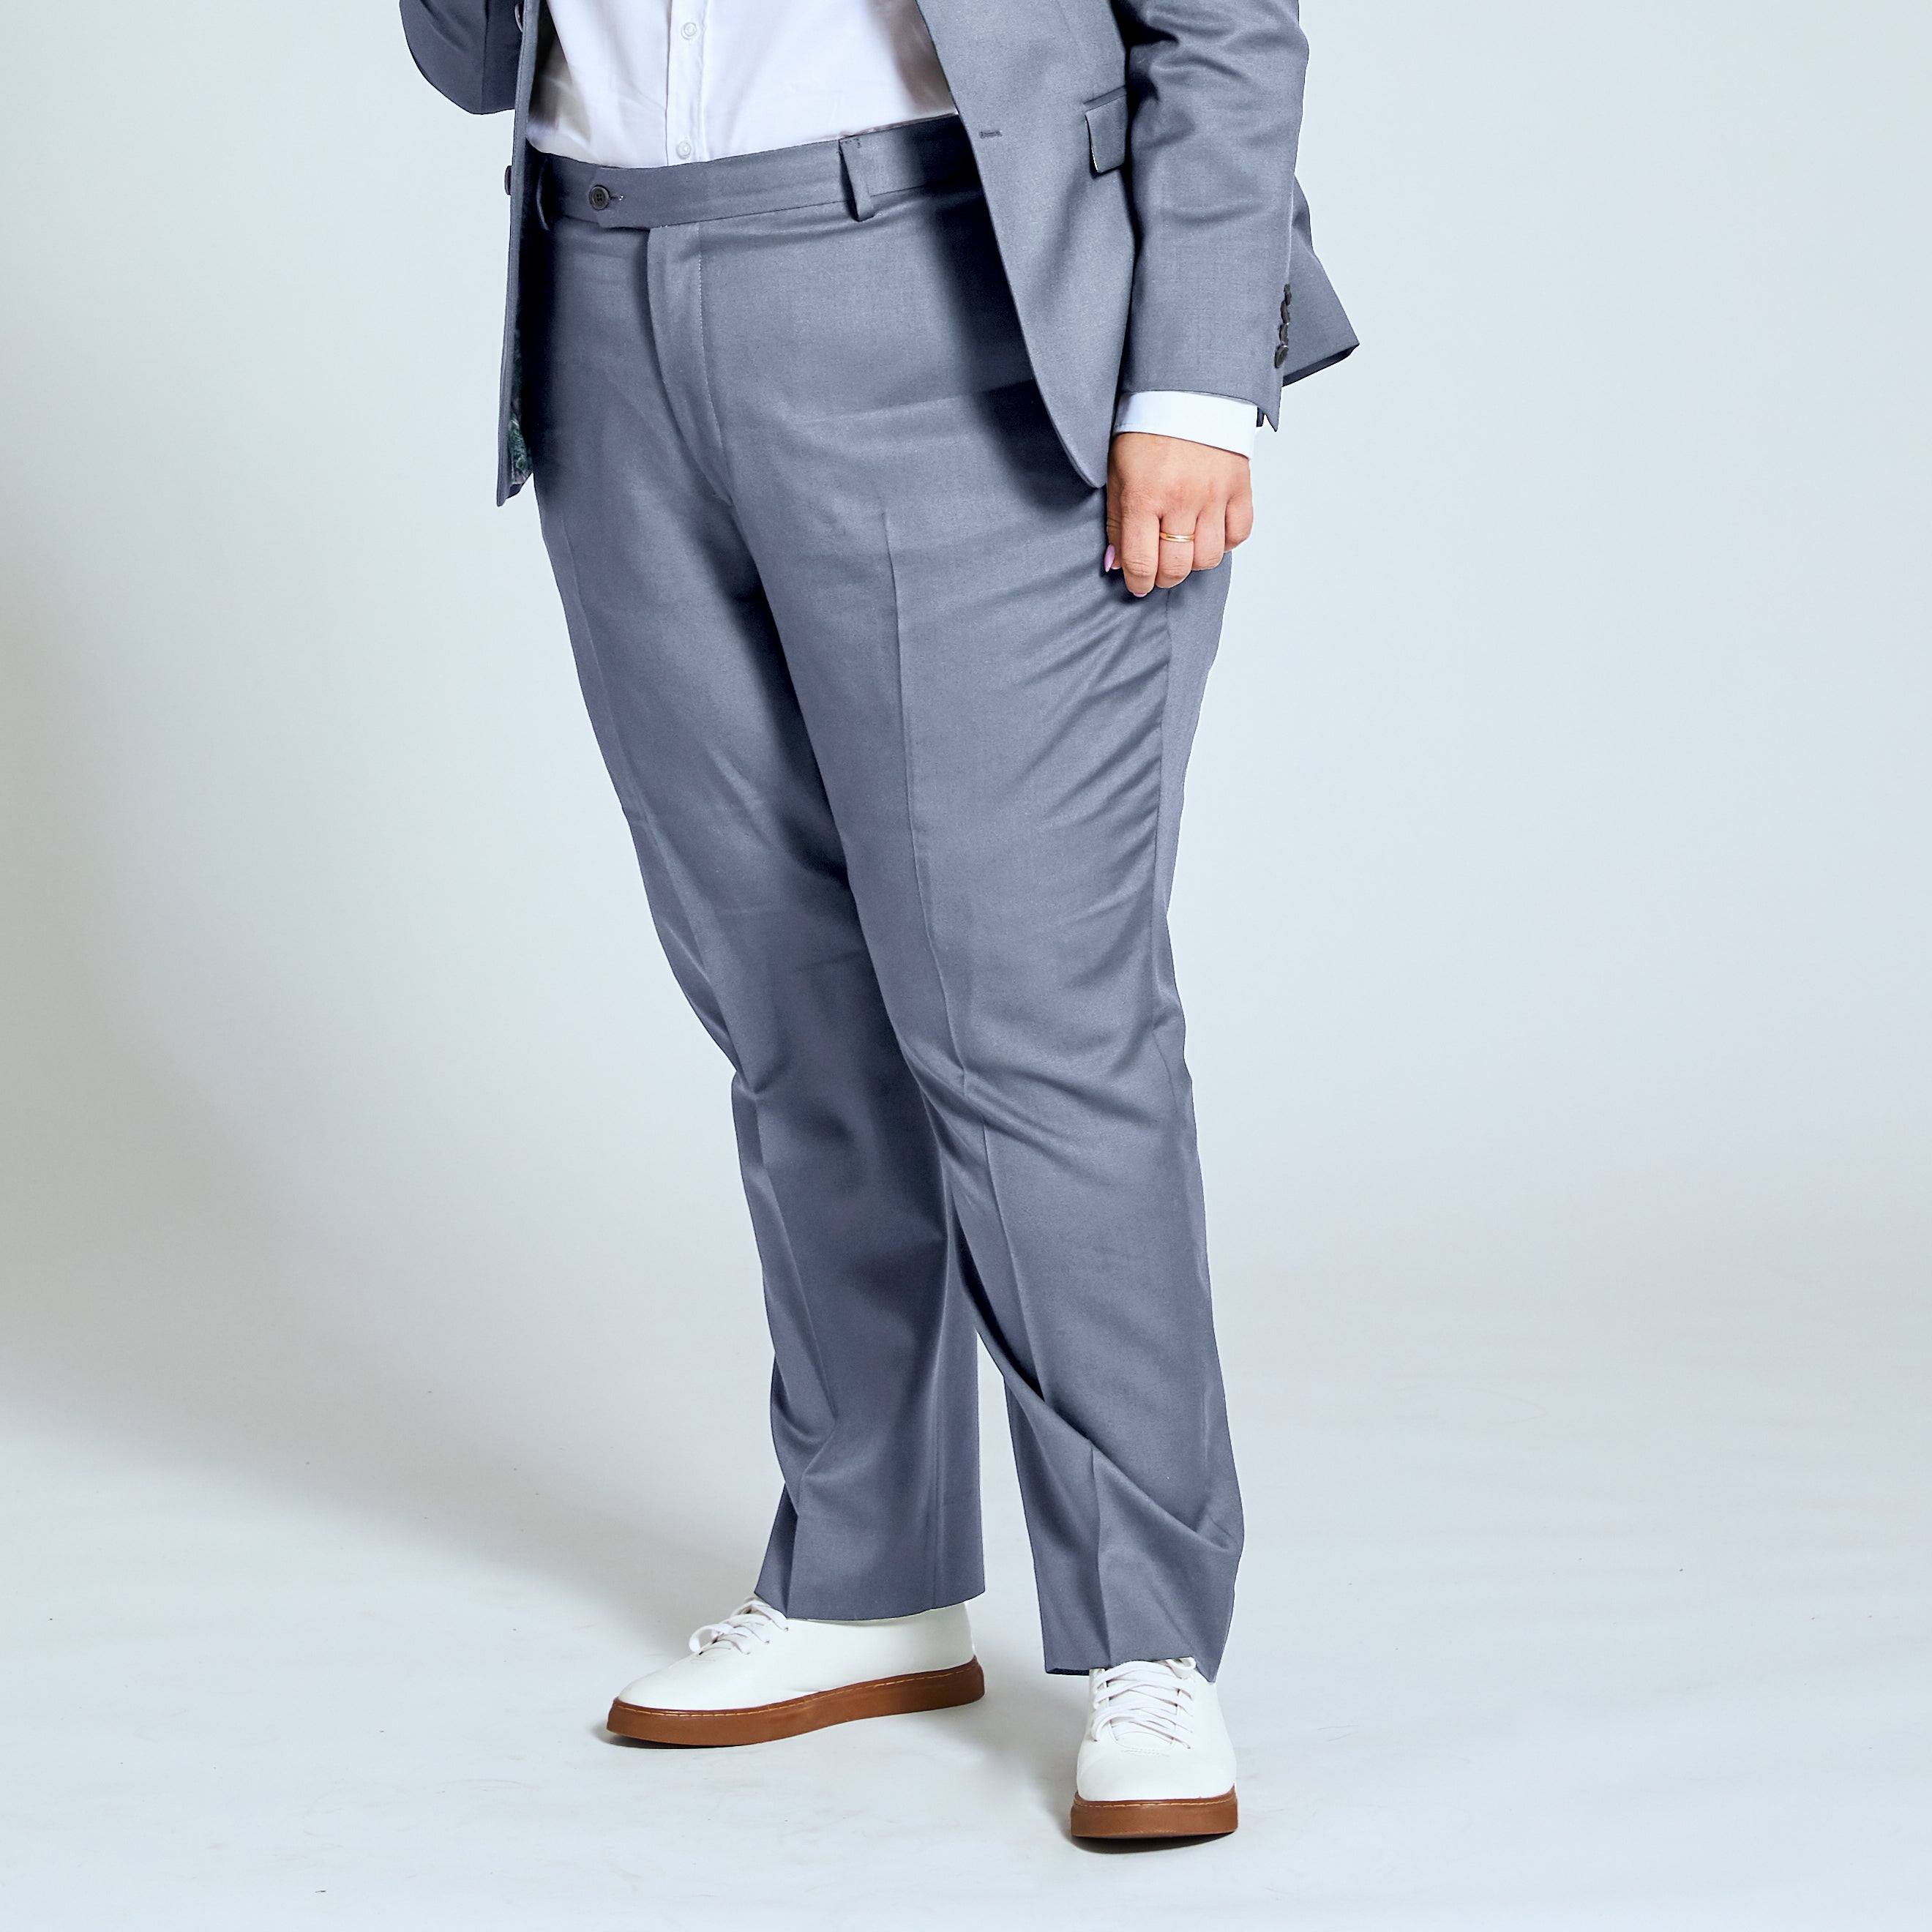 Buy Peter England Men Grey Check Super Slim Fit Formal Trousers online